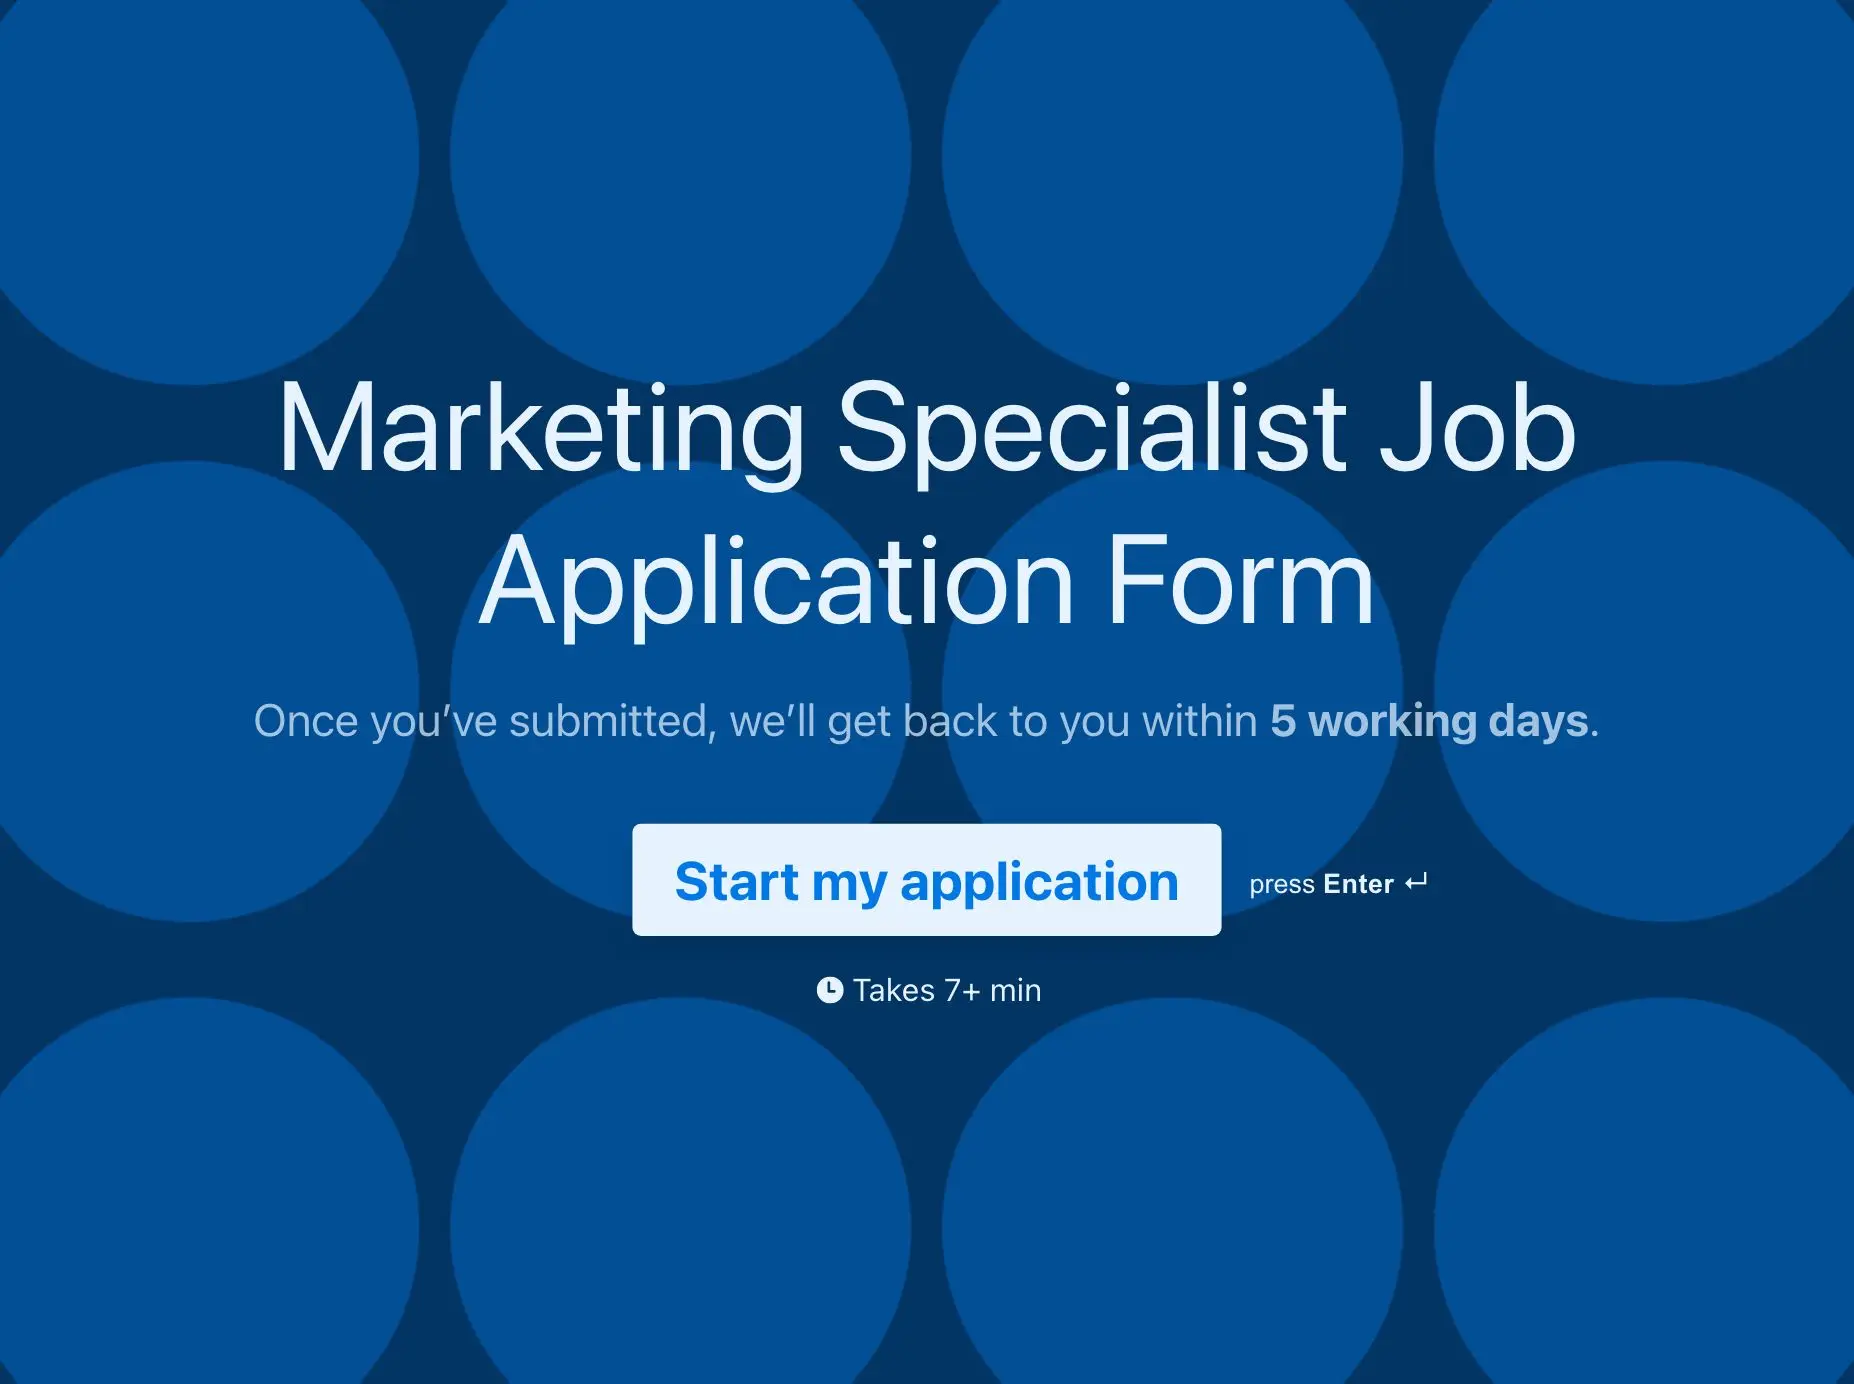 Marketing Specialist Job Application Form Template Hero